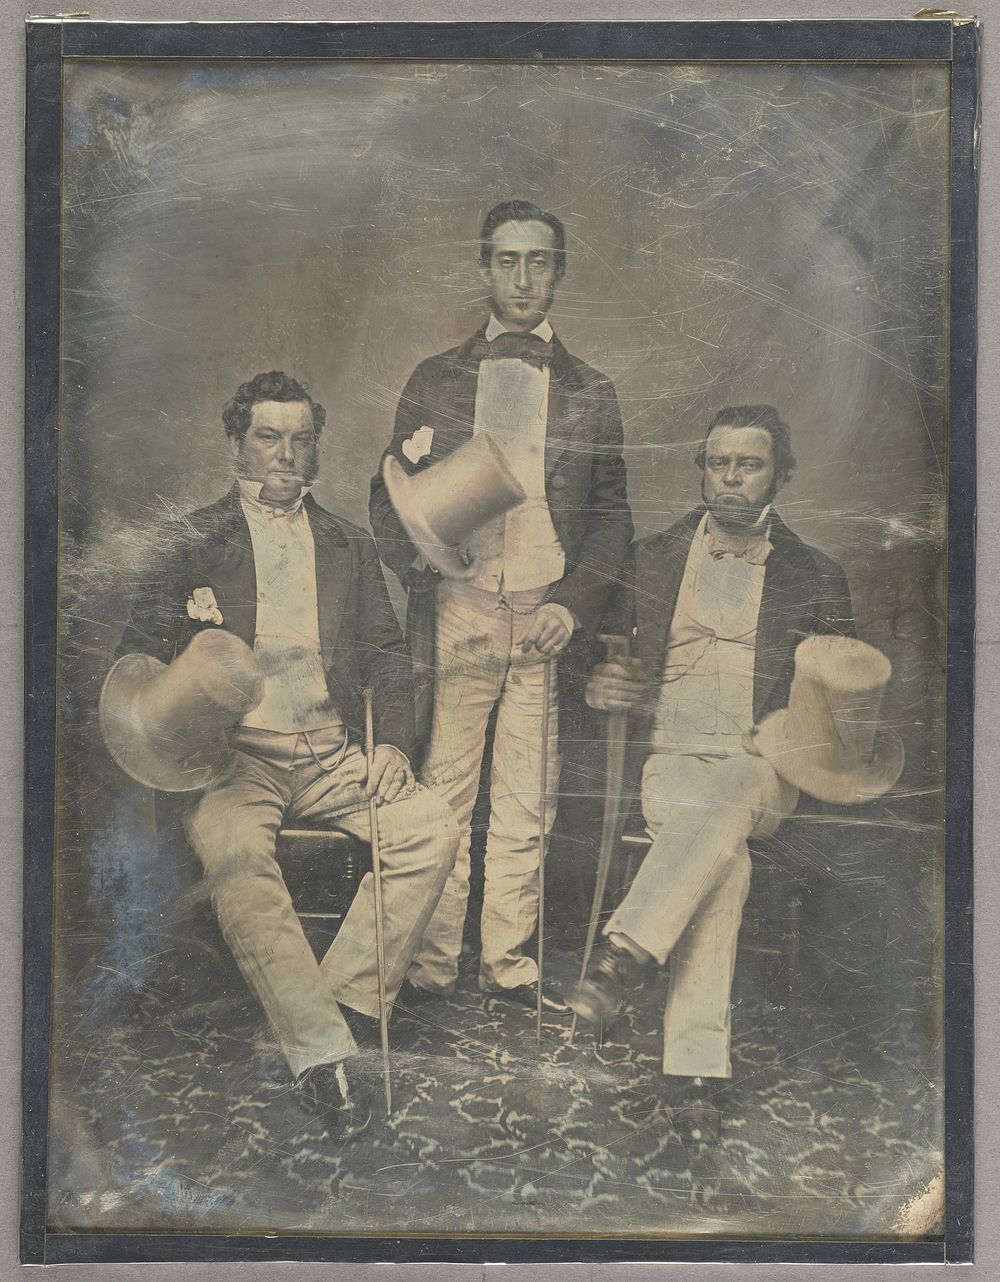 Portrait of Three Men Holding Top Hats